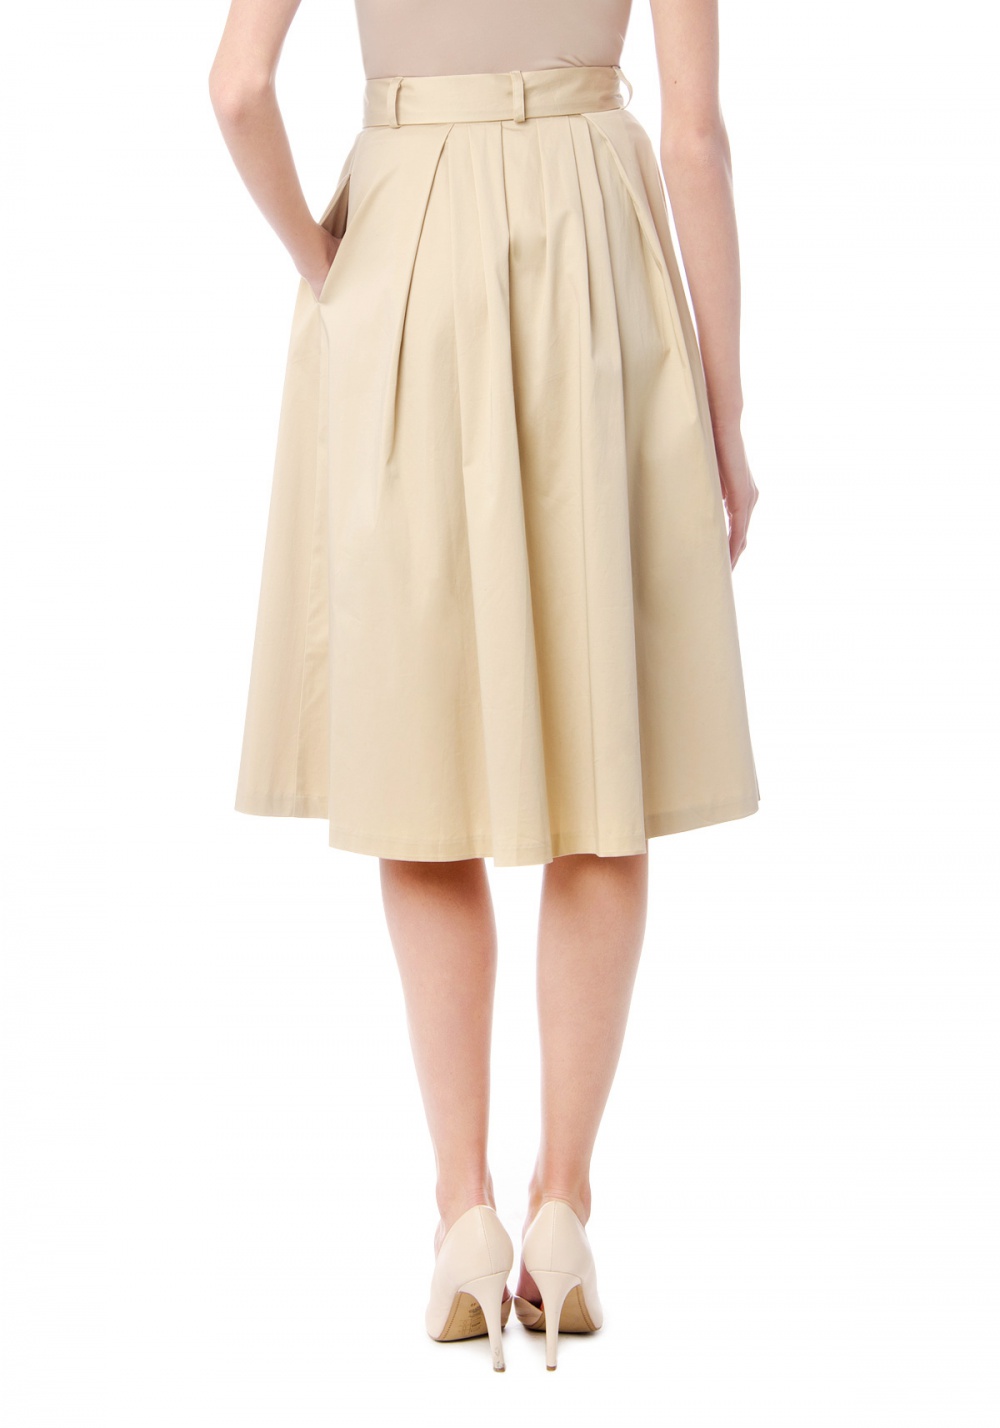 Золотисто-бежевая юбка миди Zarina в стиле Сафари или Нью Лук. 44-46 размер.